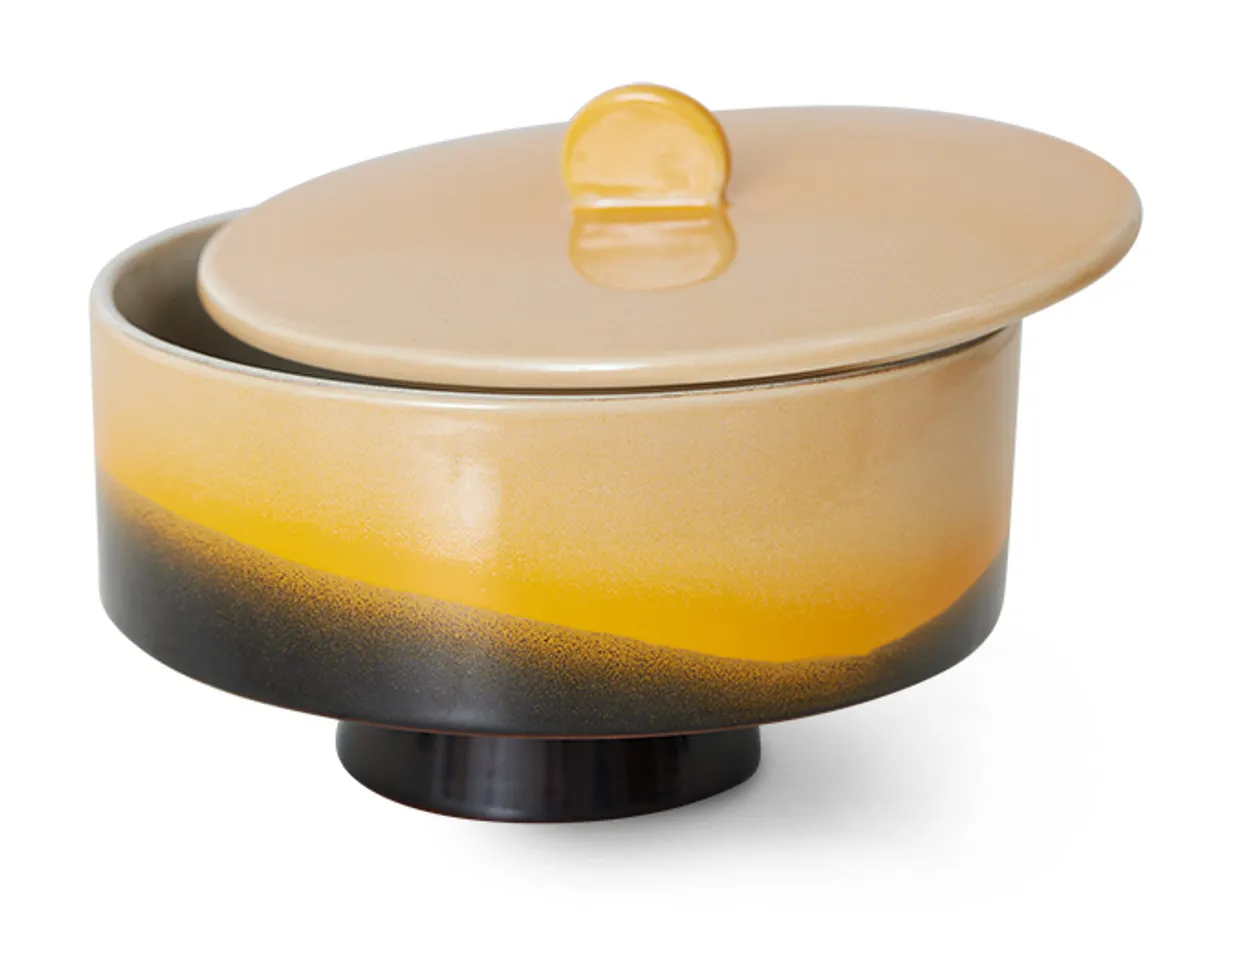 70s ceramics: bonbon bowl, sunshine